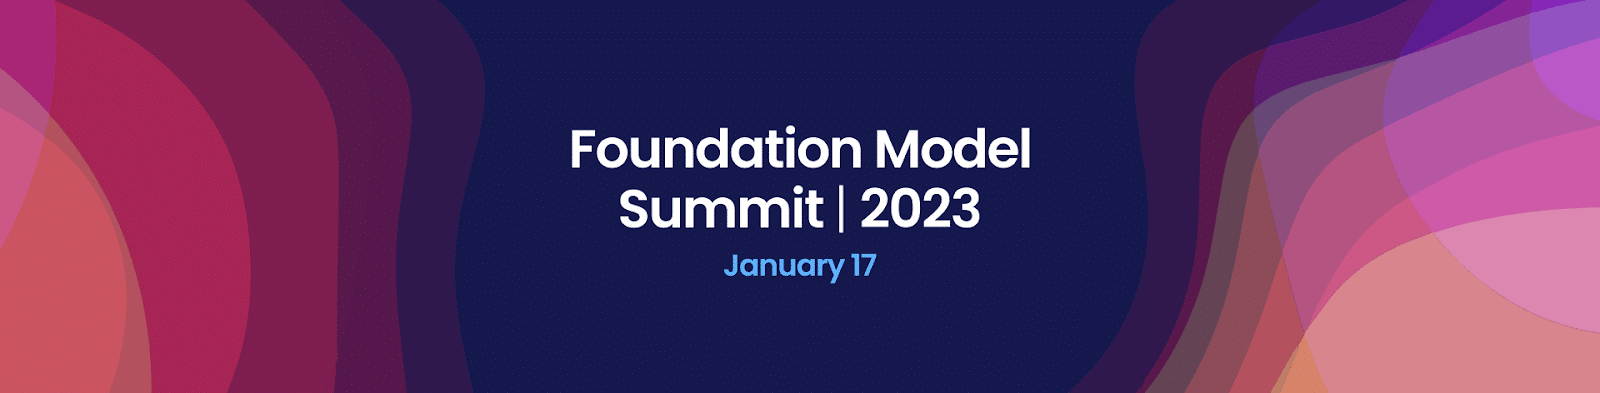 foundation model virtual summit banner